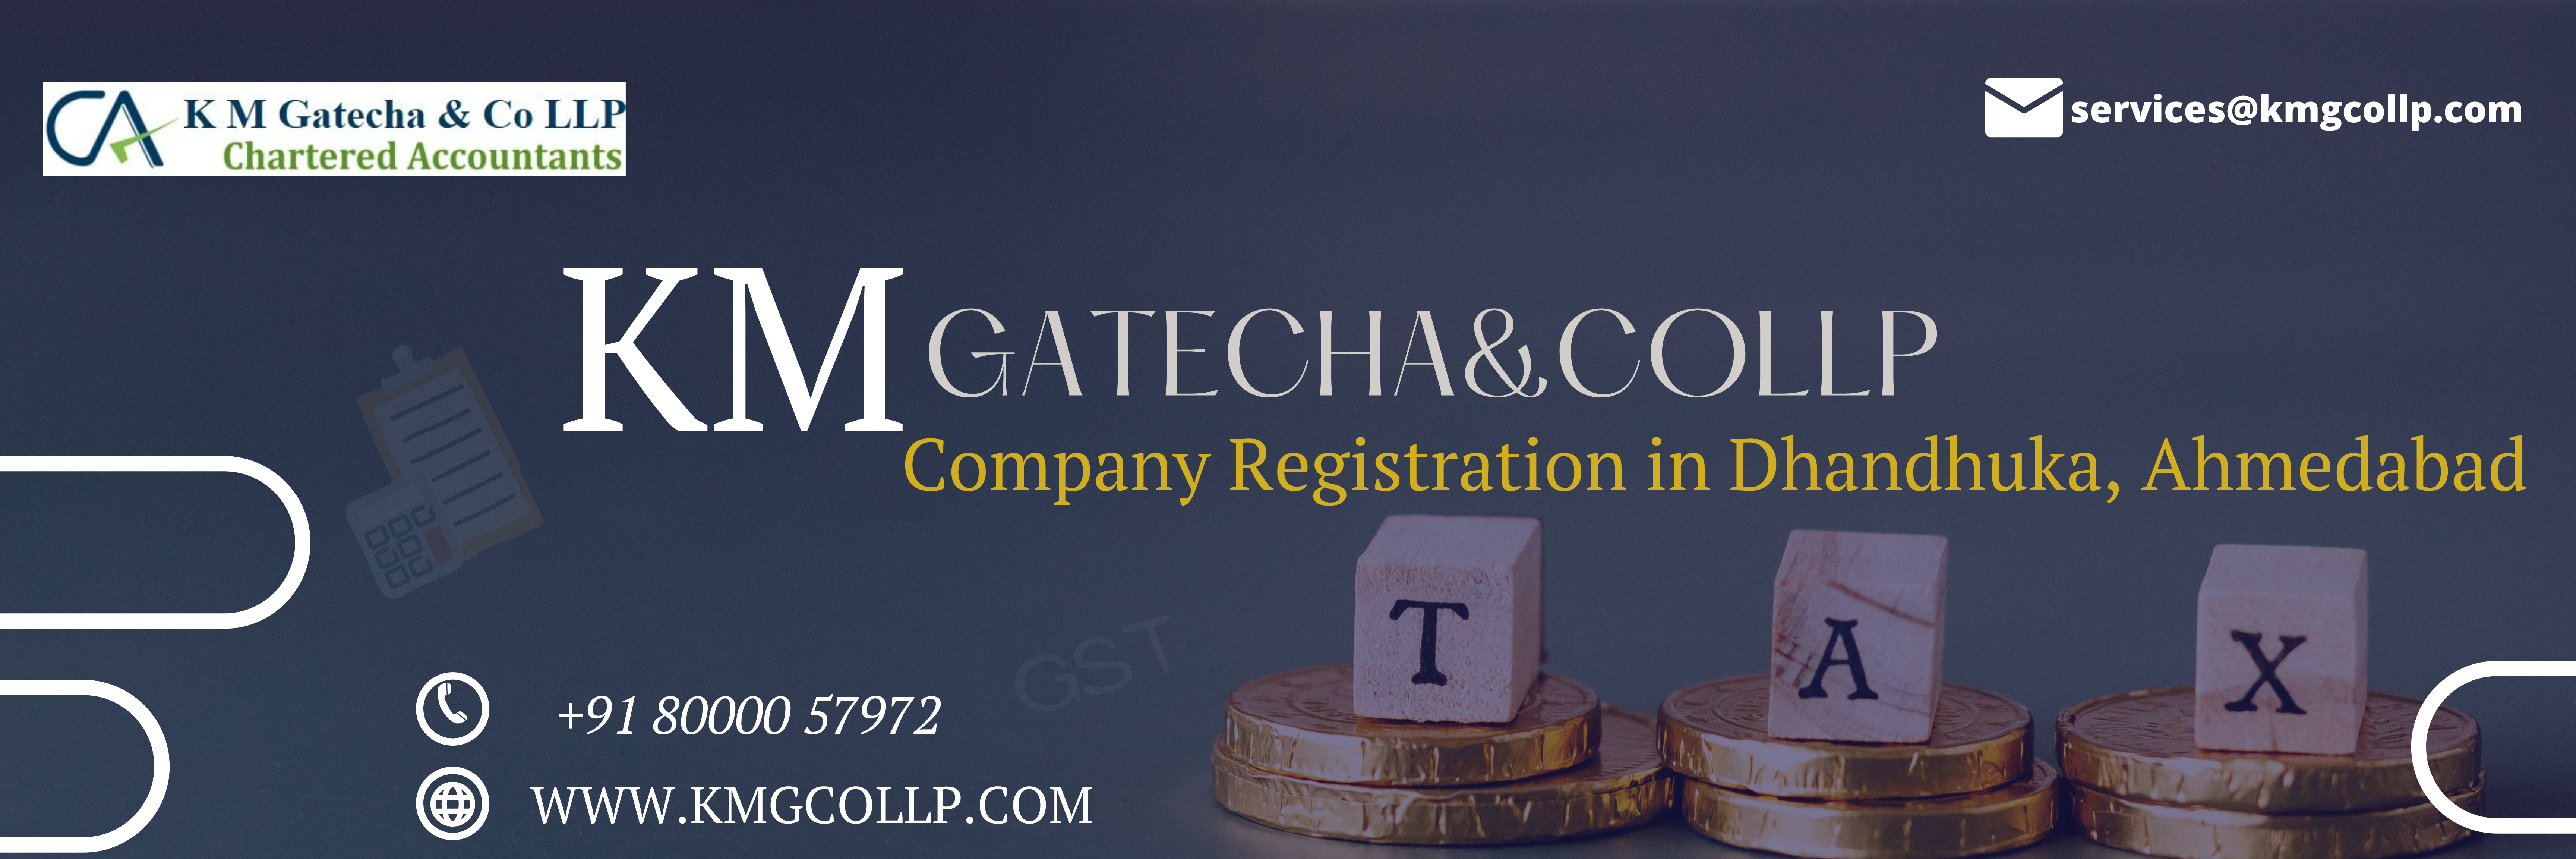 Company Registration in Dhandhuka, Ahmedabad